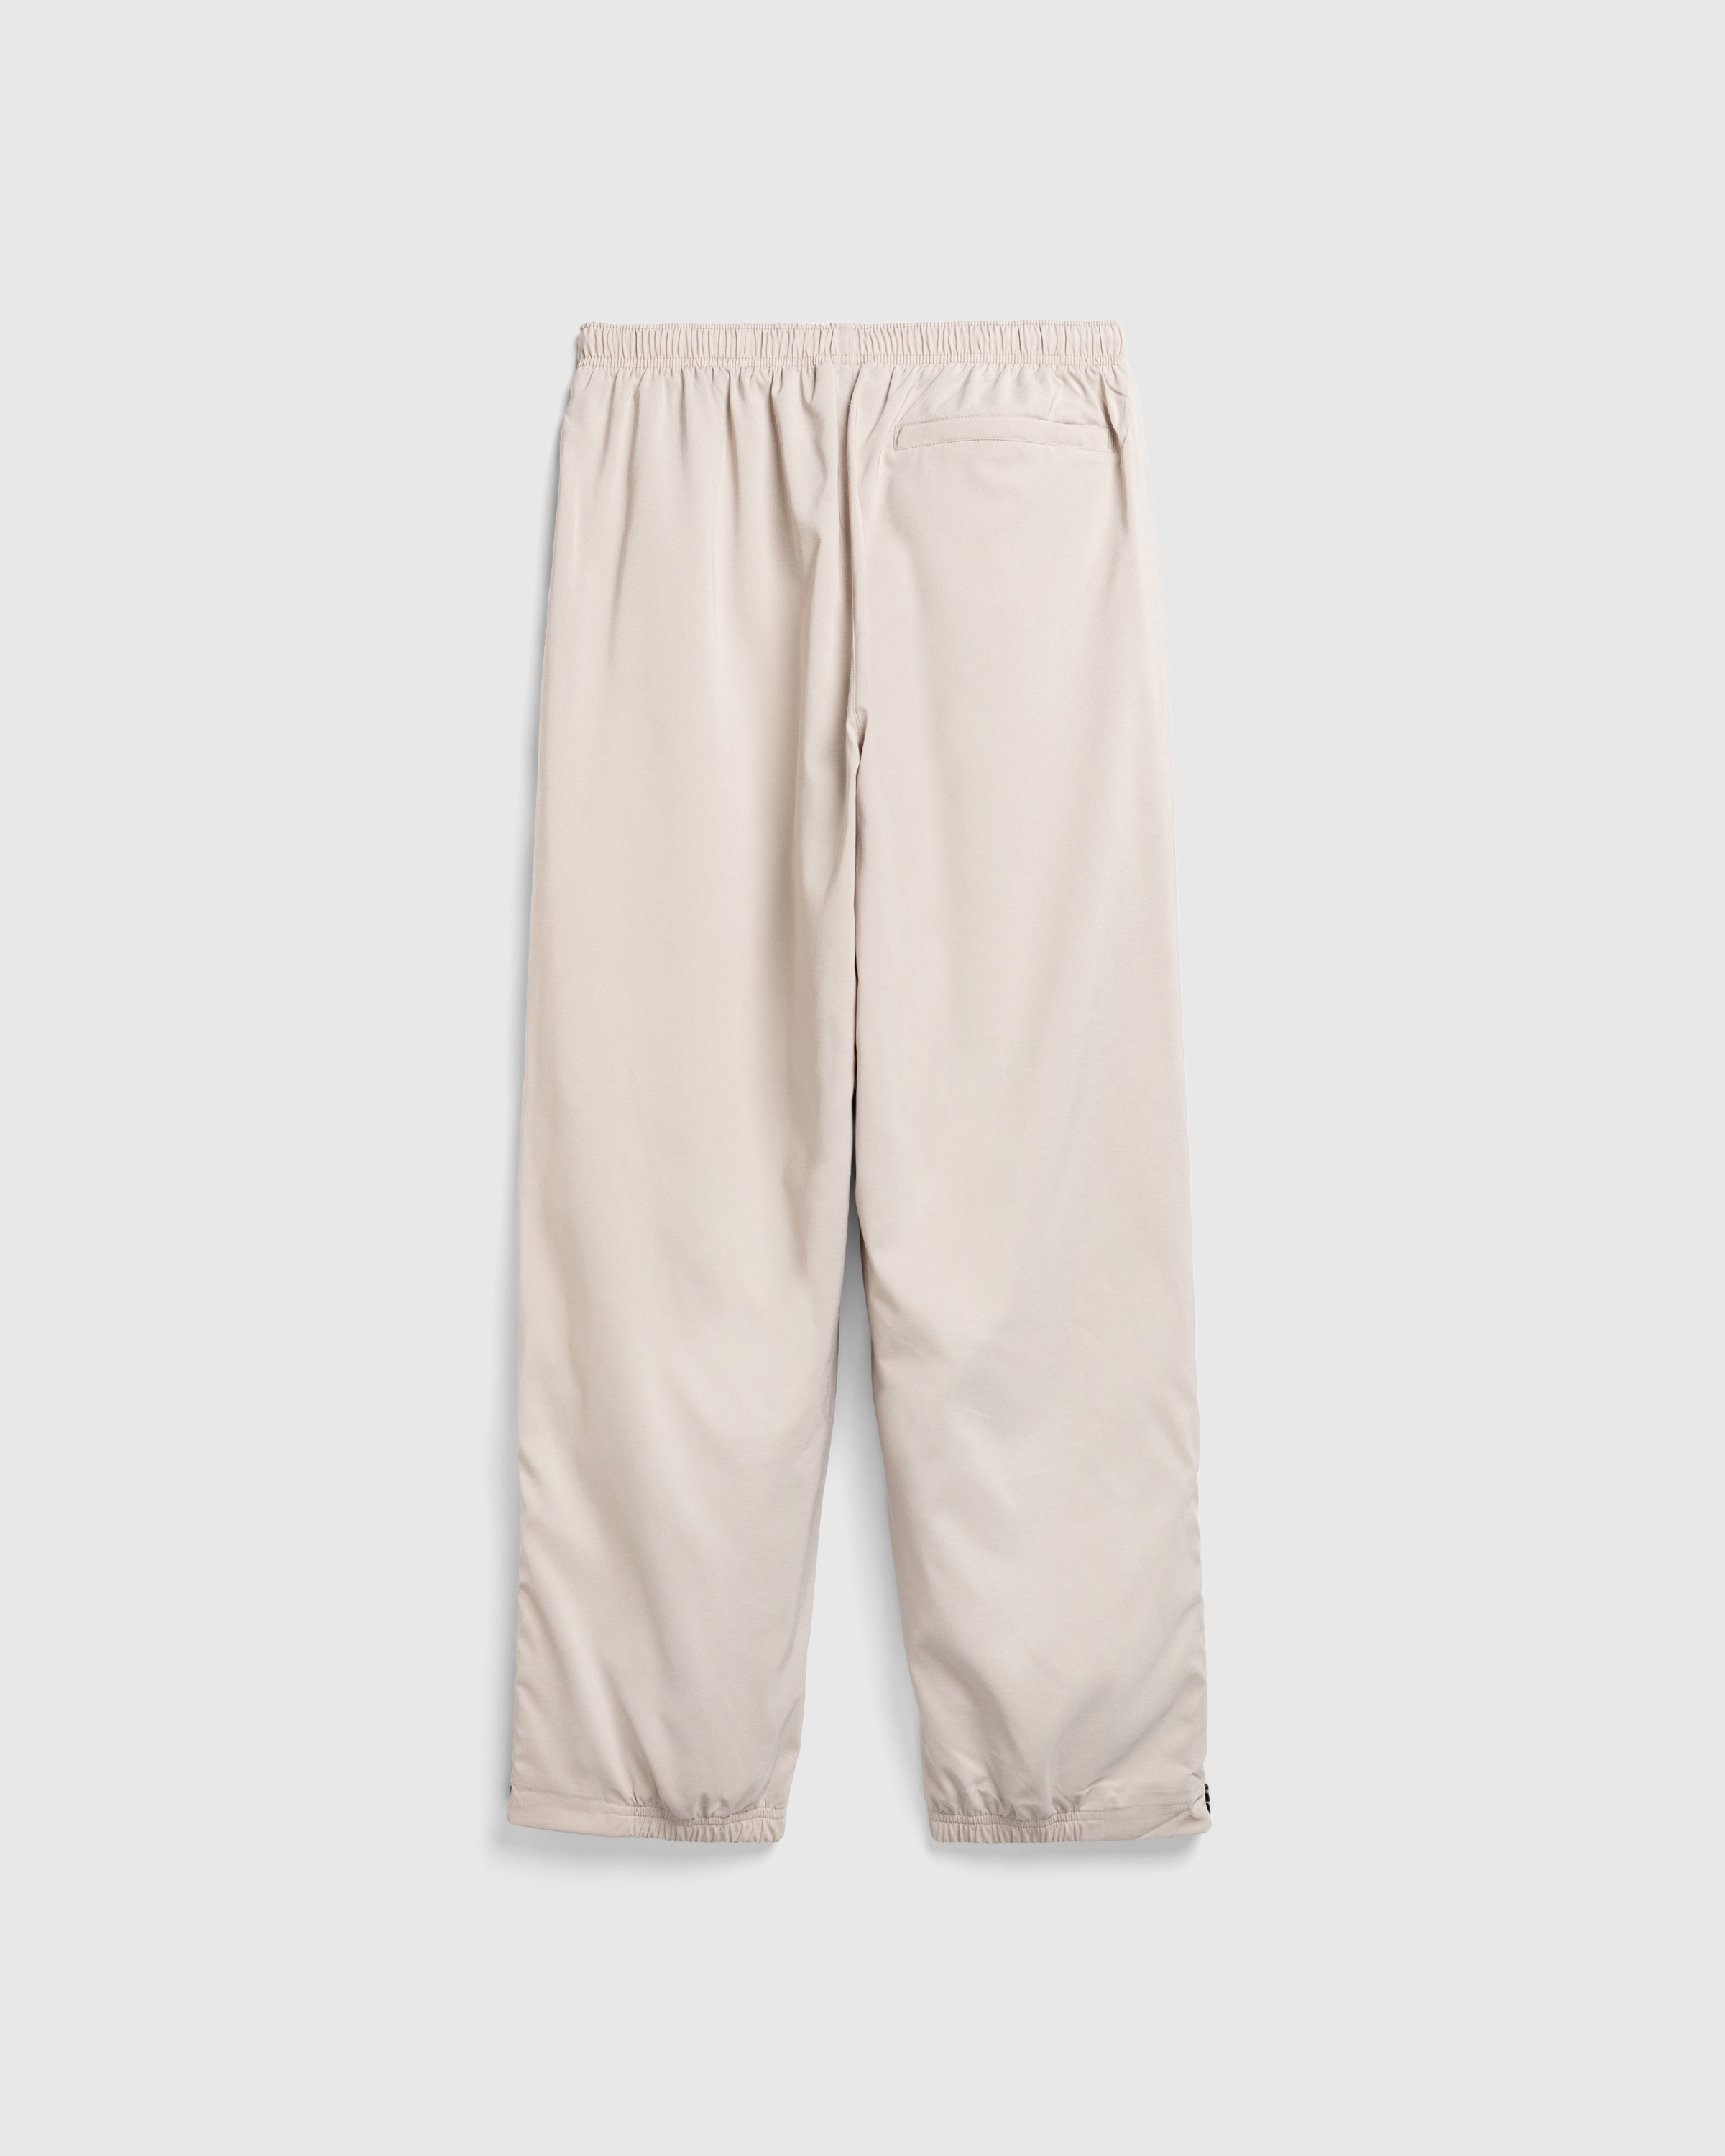 Nike x Patta – Men's Track Pants Sanddrift/Cream II - Track Pants - White - Image 6